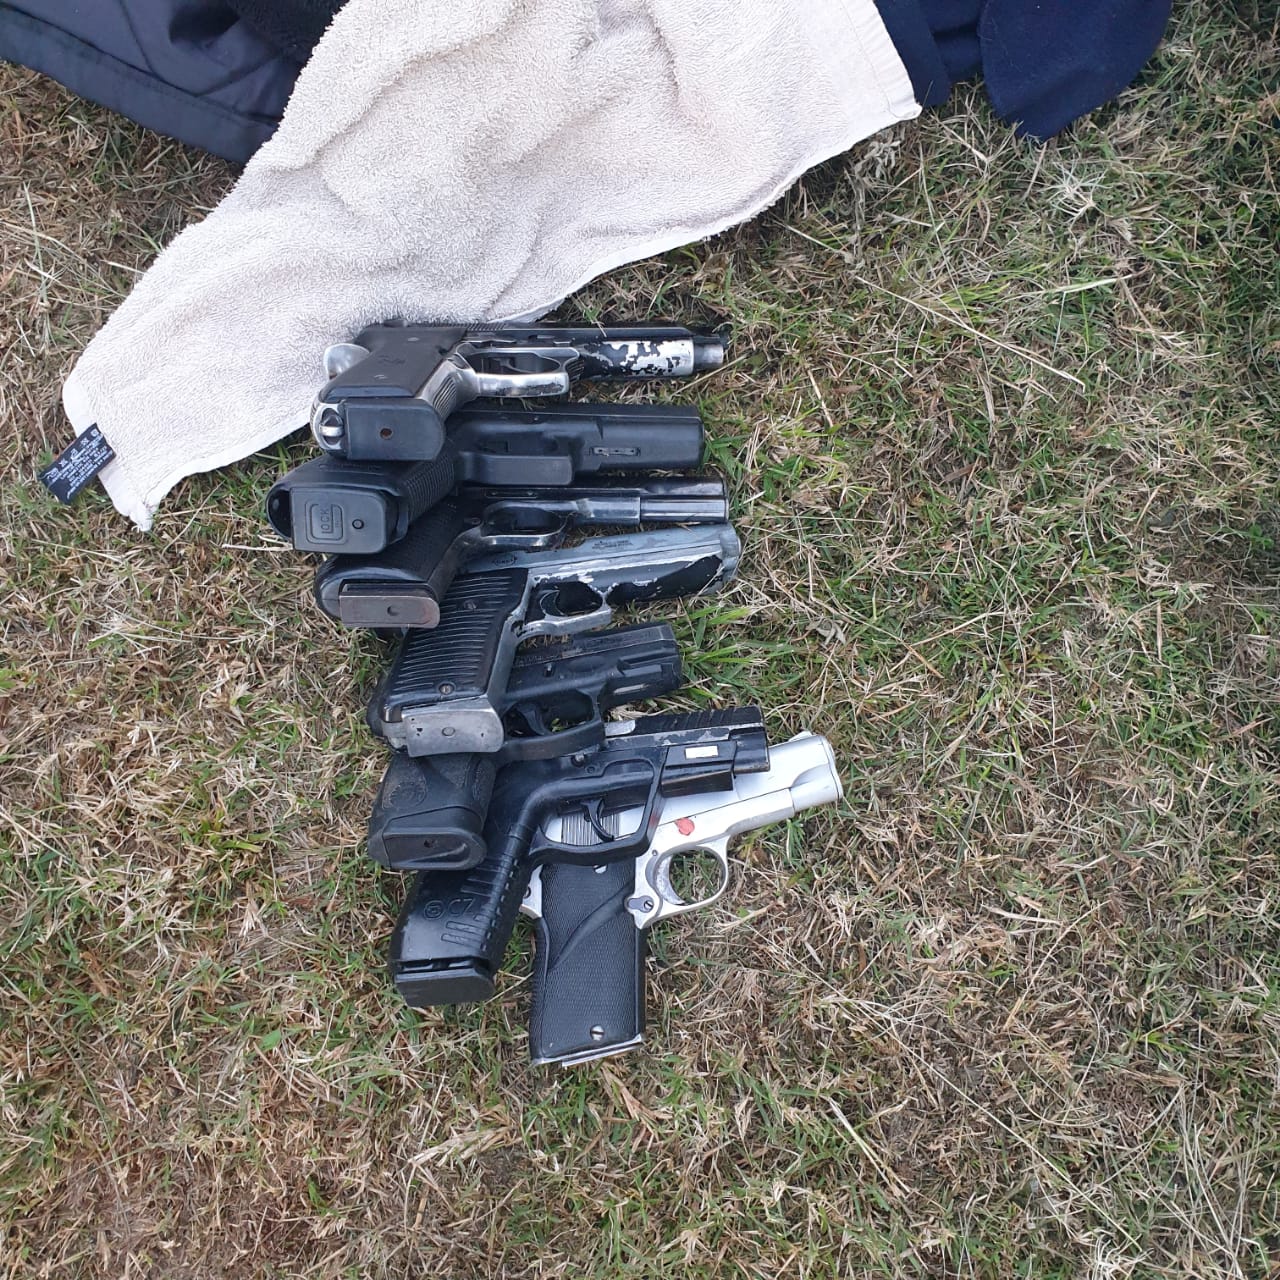 SAPS Umlazi K9 Unit members recover unlicensed firearms from career criminals